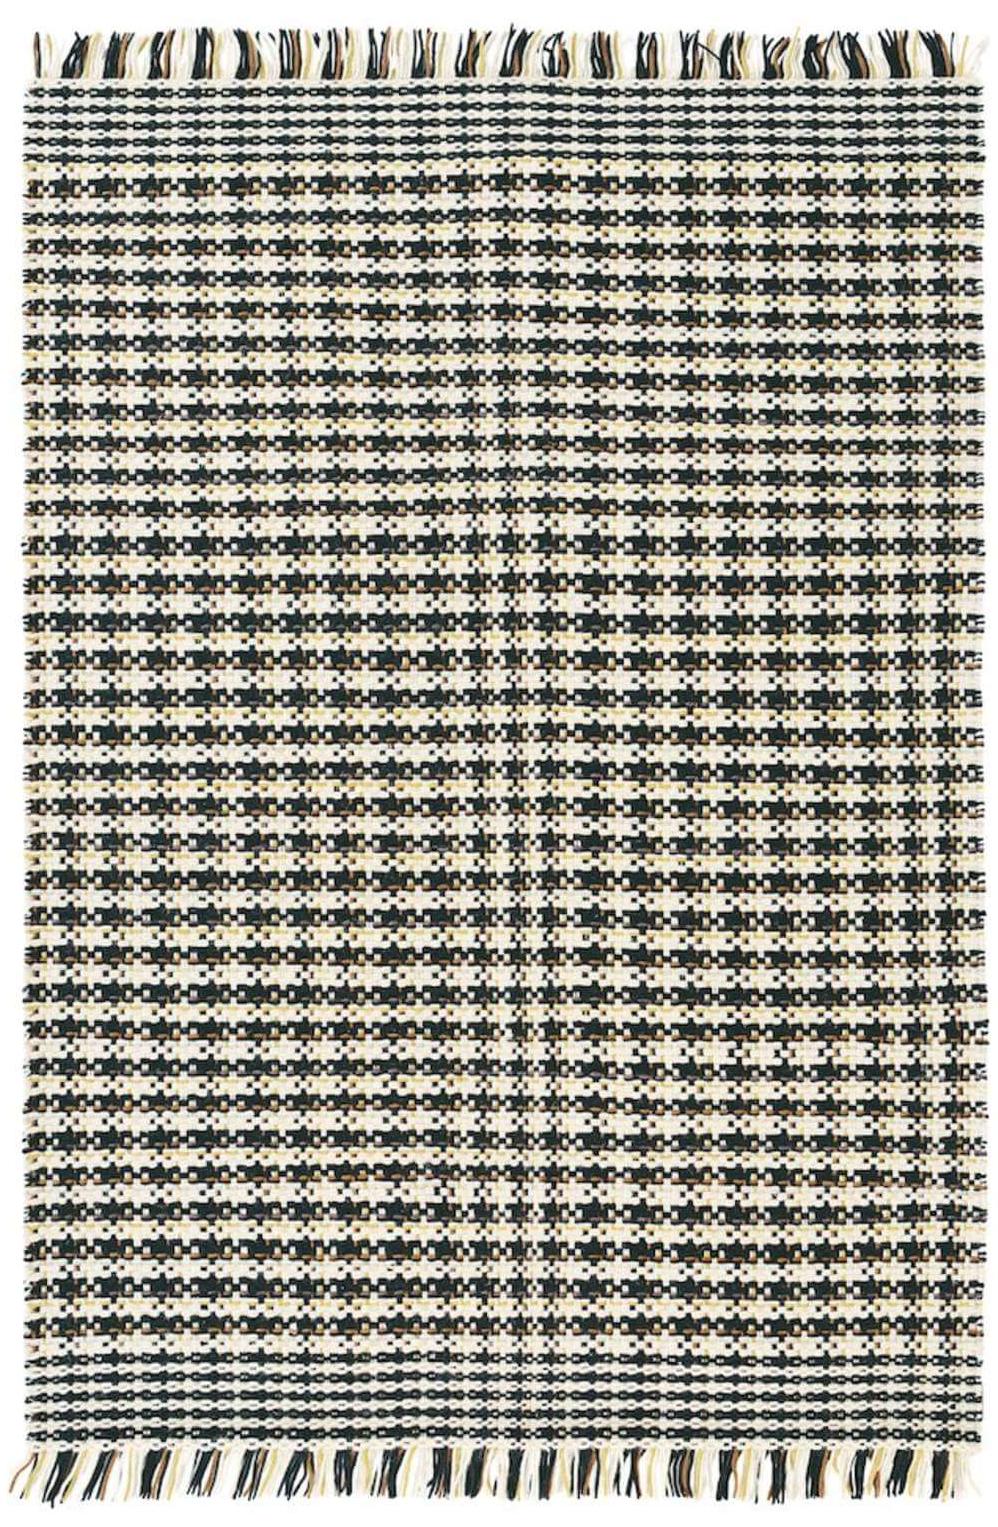 Checkered Kilim Rug ☞ Size: 250 x 350 cm